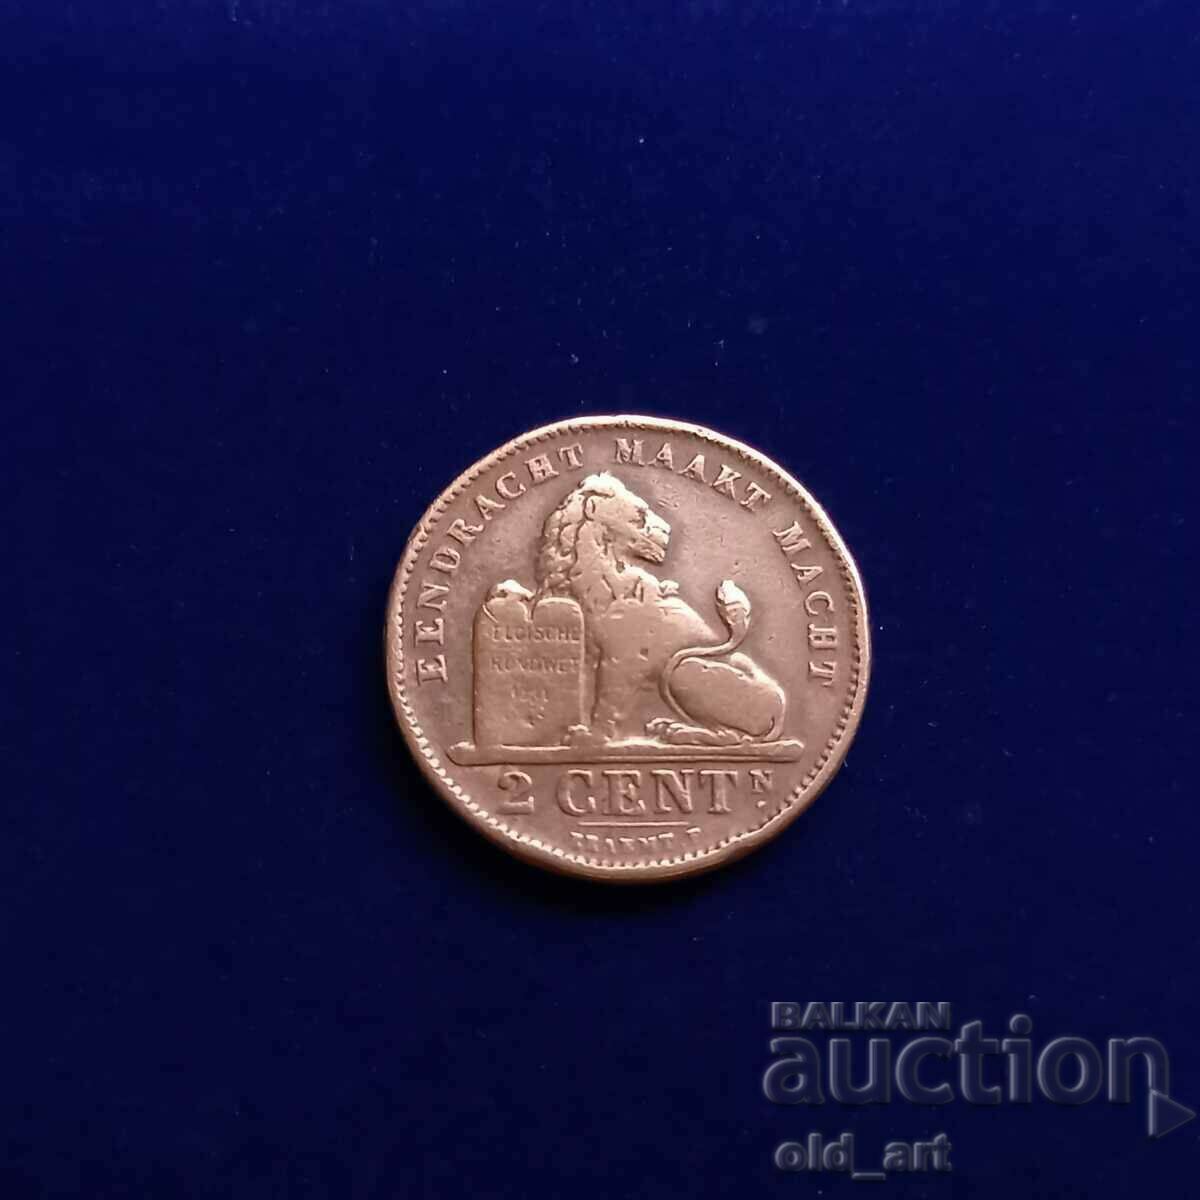 Coin - Belgium, 2 cents 1902